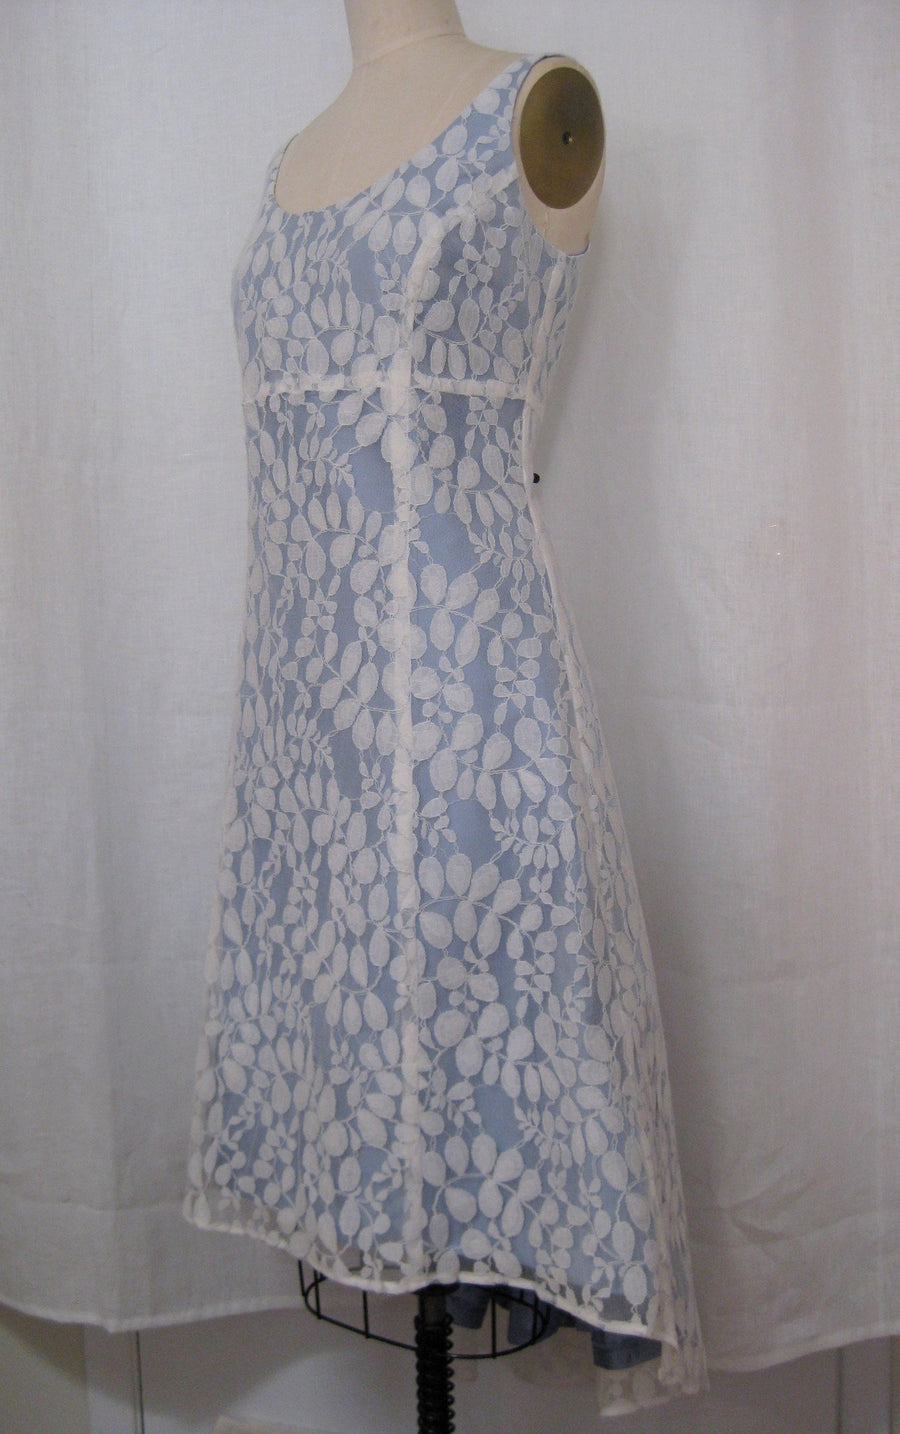 Lace Ballet Scoopneck Tea-Length Dress, size Small